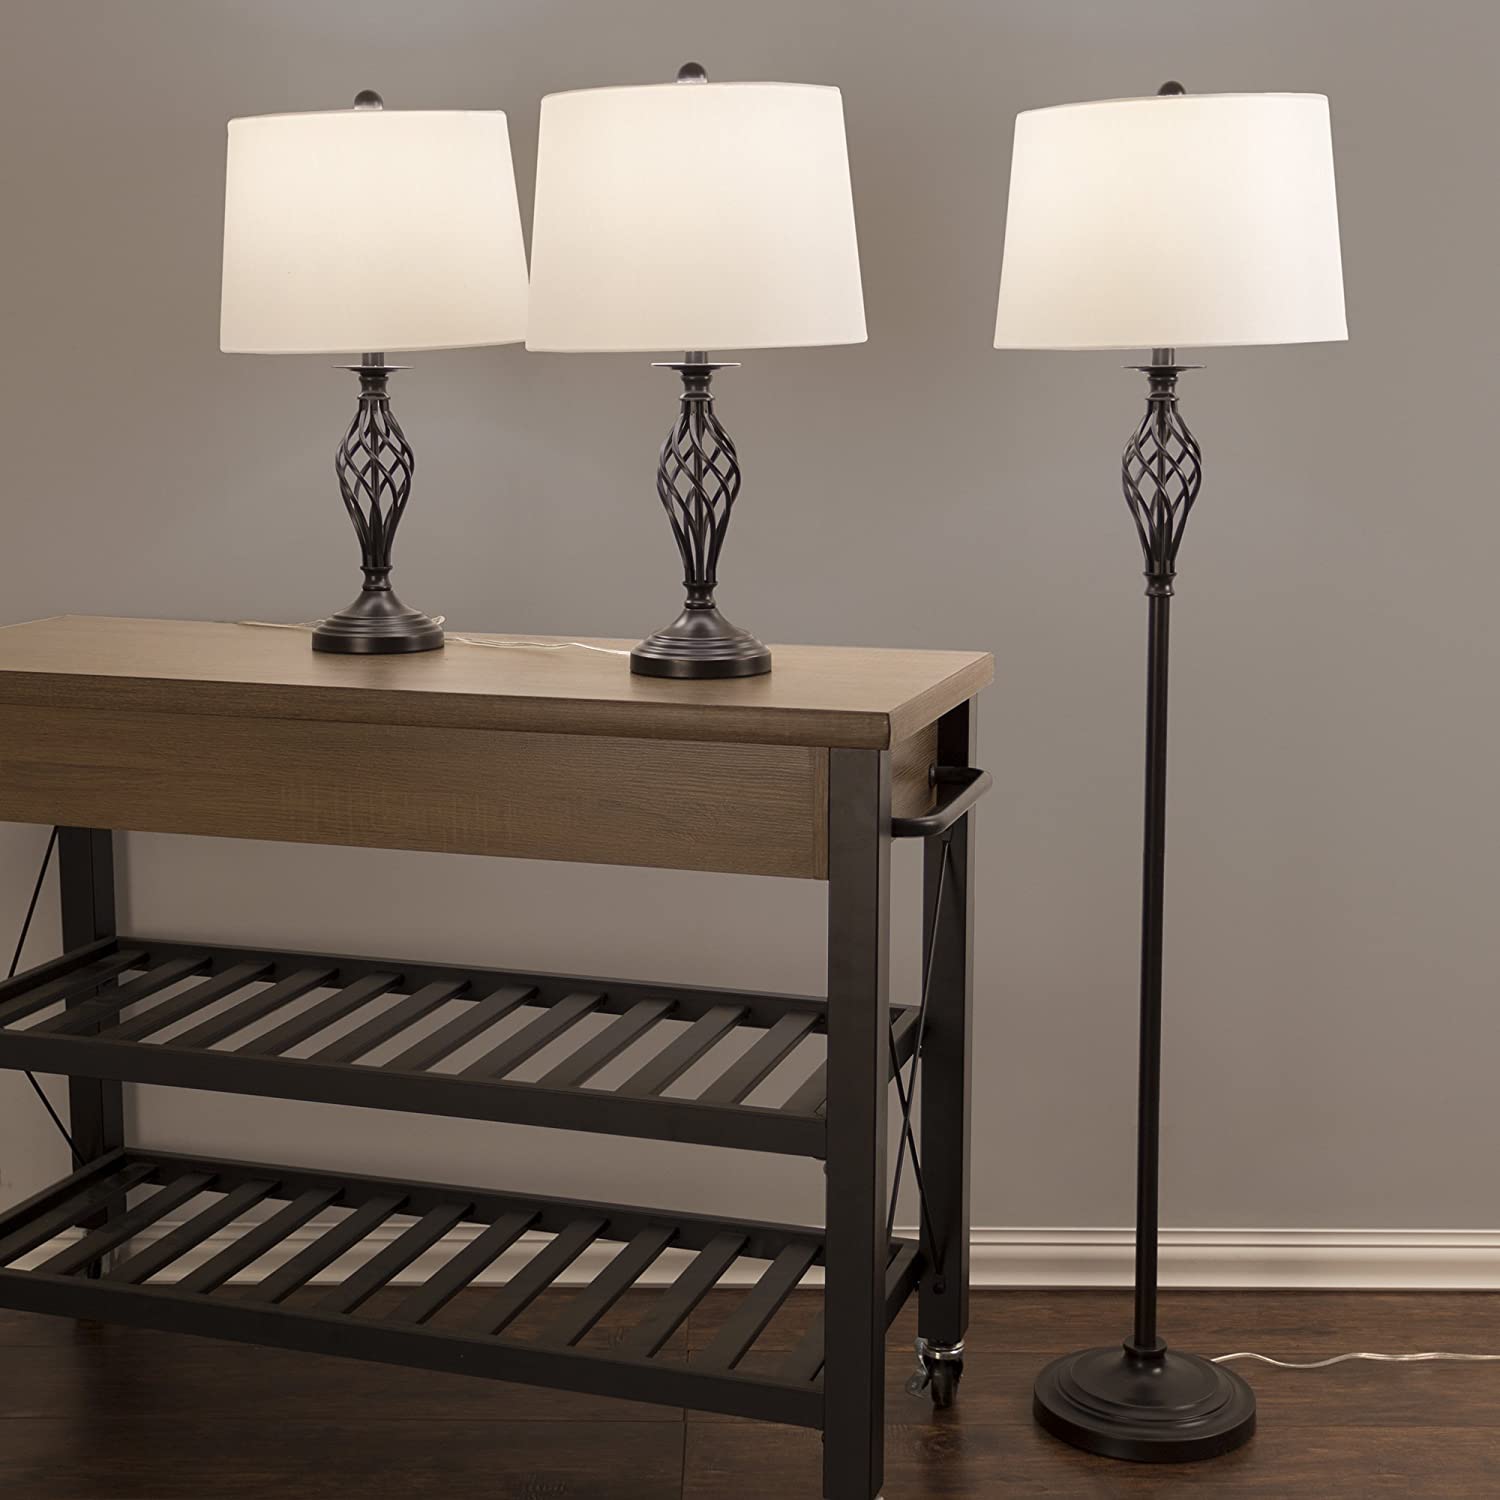 Spiral Cage Design lampsets 5 Lamps Buy - Best Online Lighting Stores